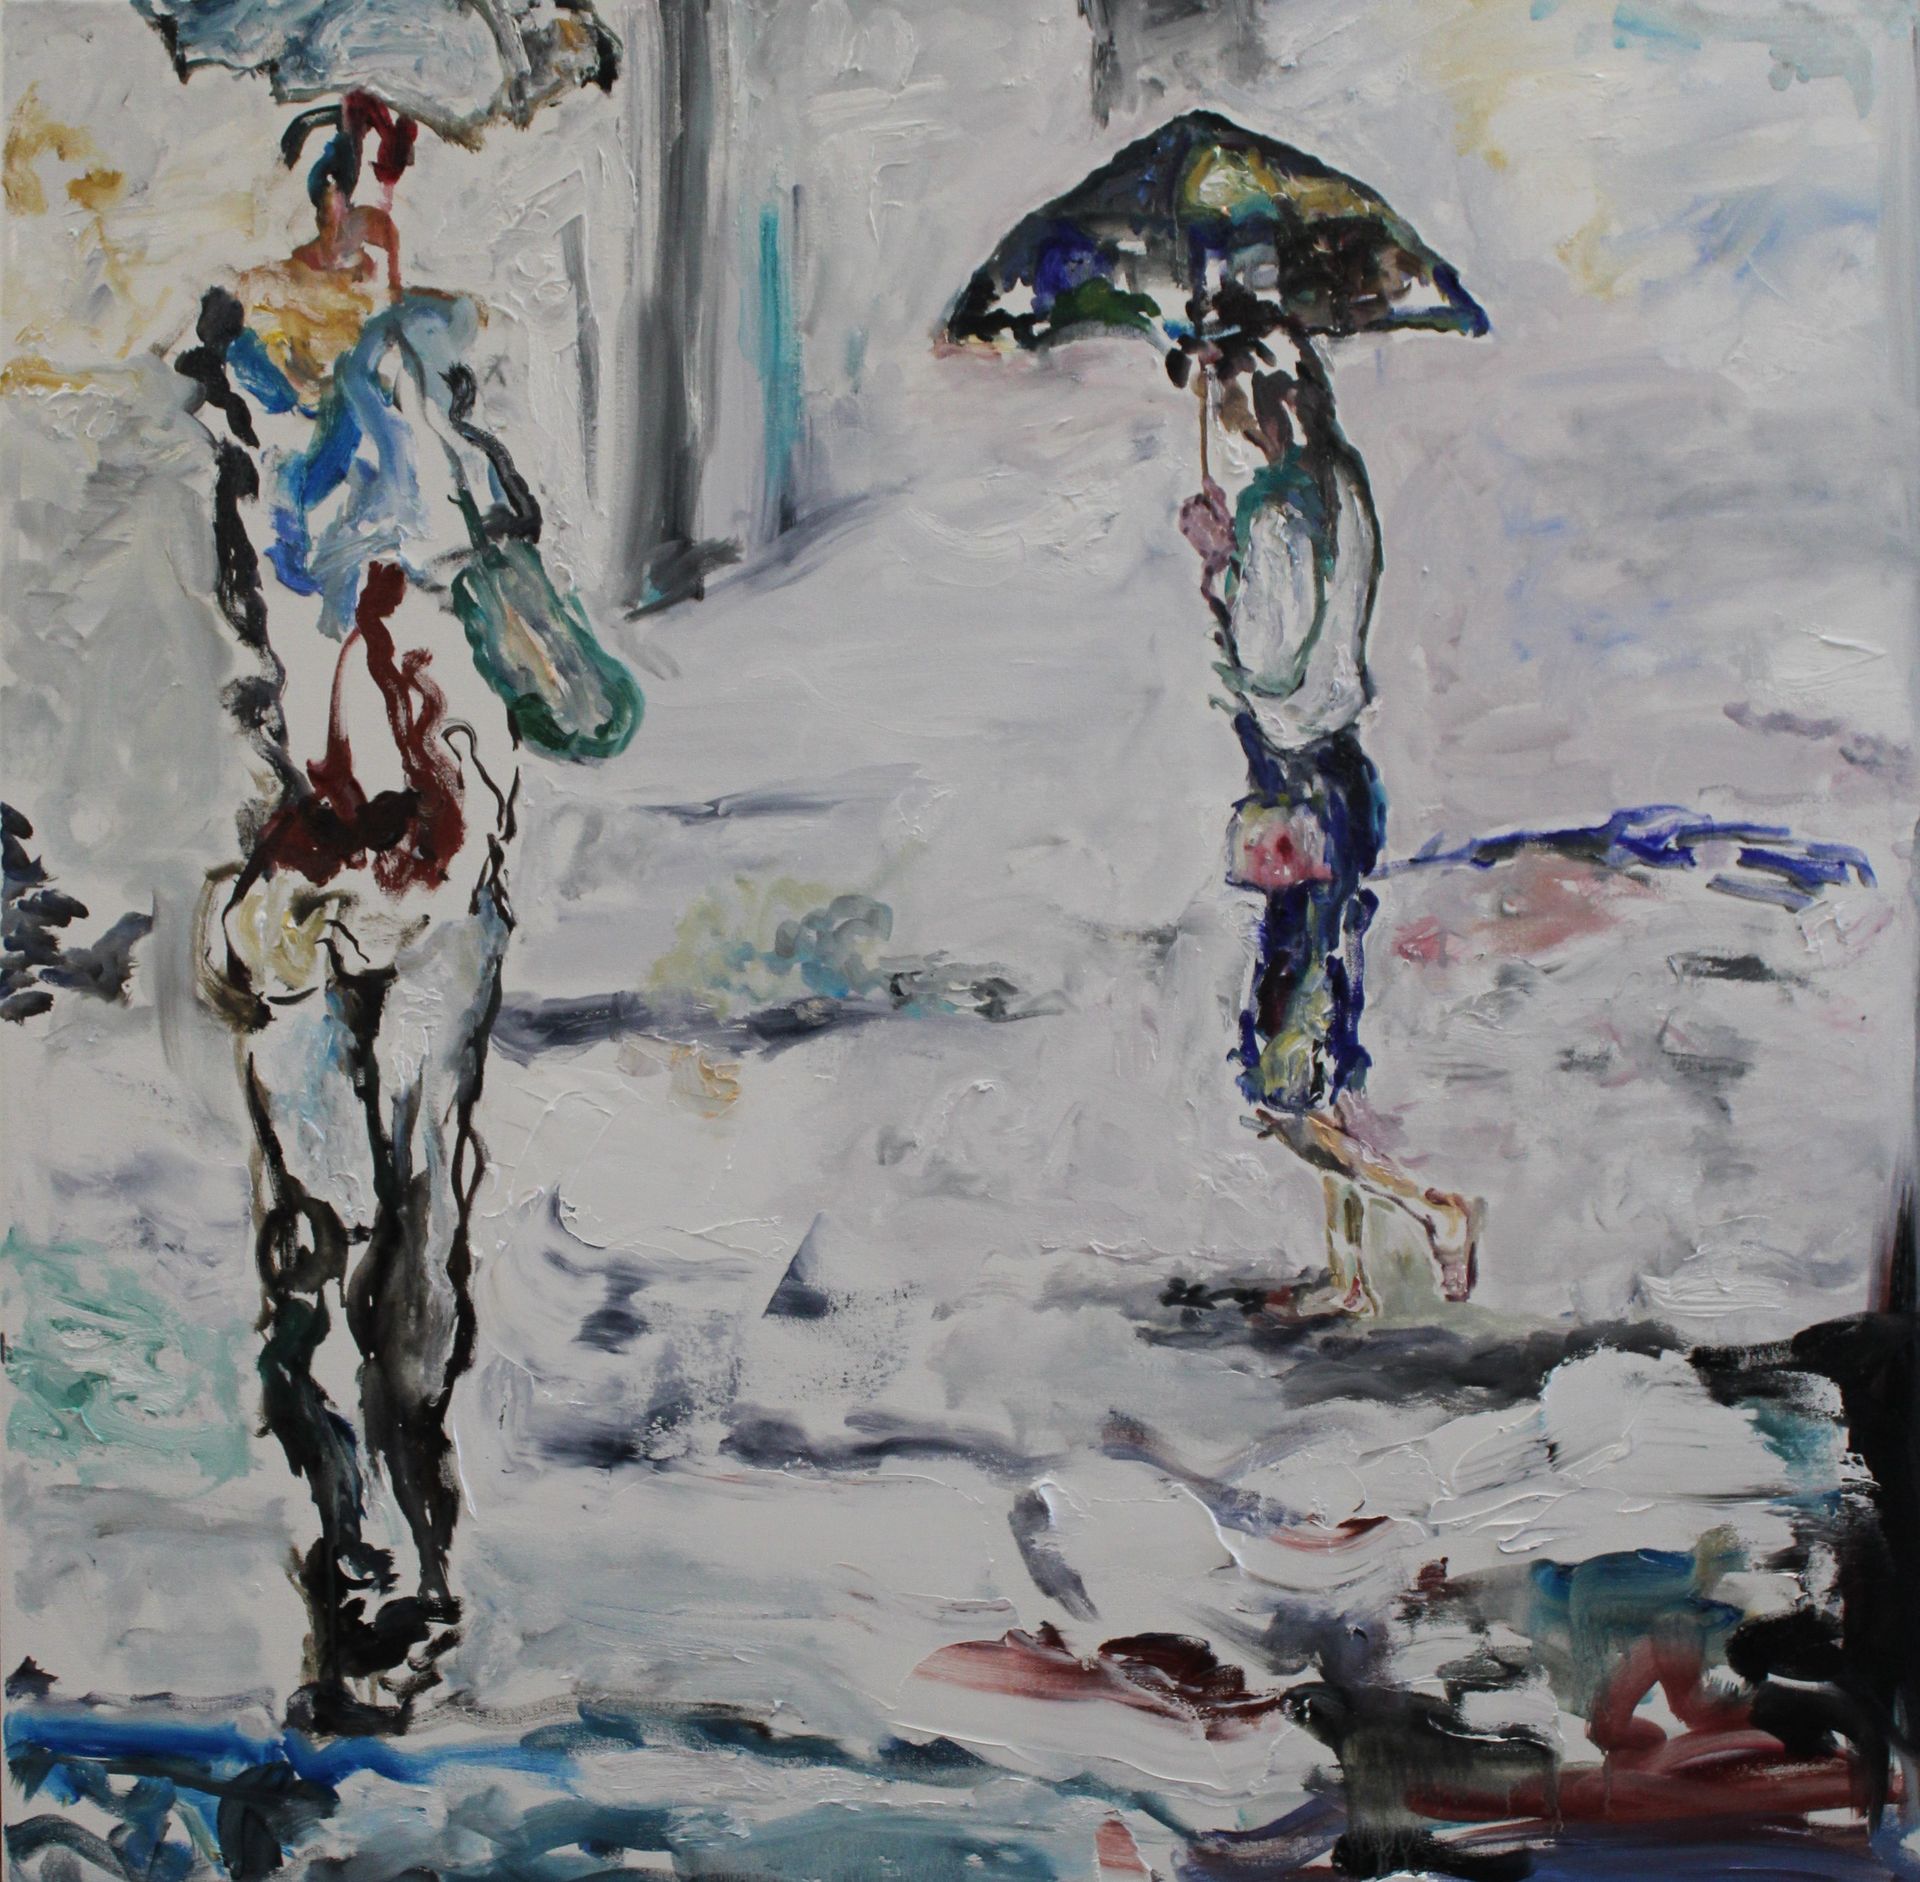 Karen FINKELSTEIN. Riparo dalla pioggia, 2022. Olio su tela, 100 x 100 cm.